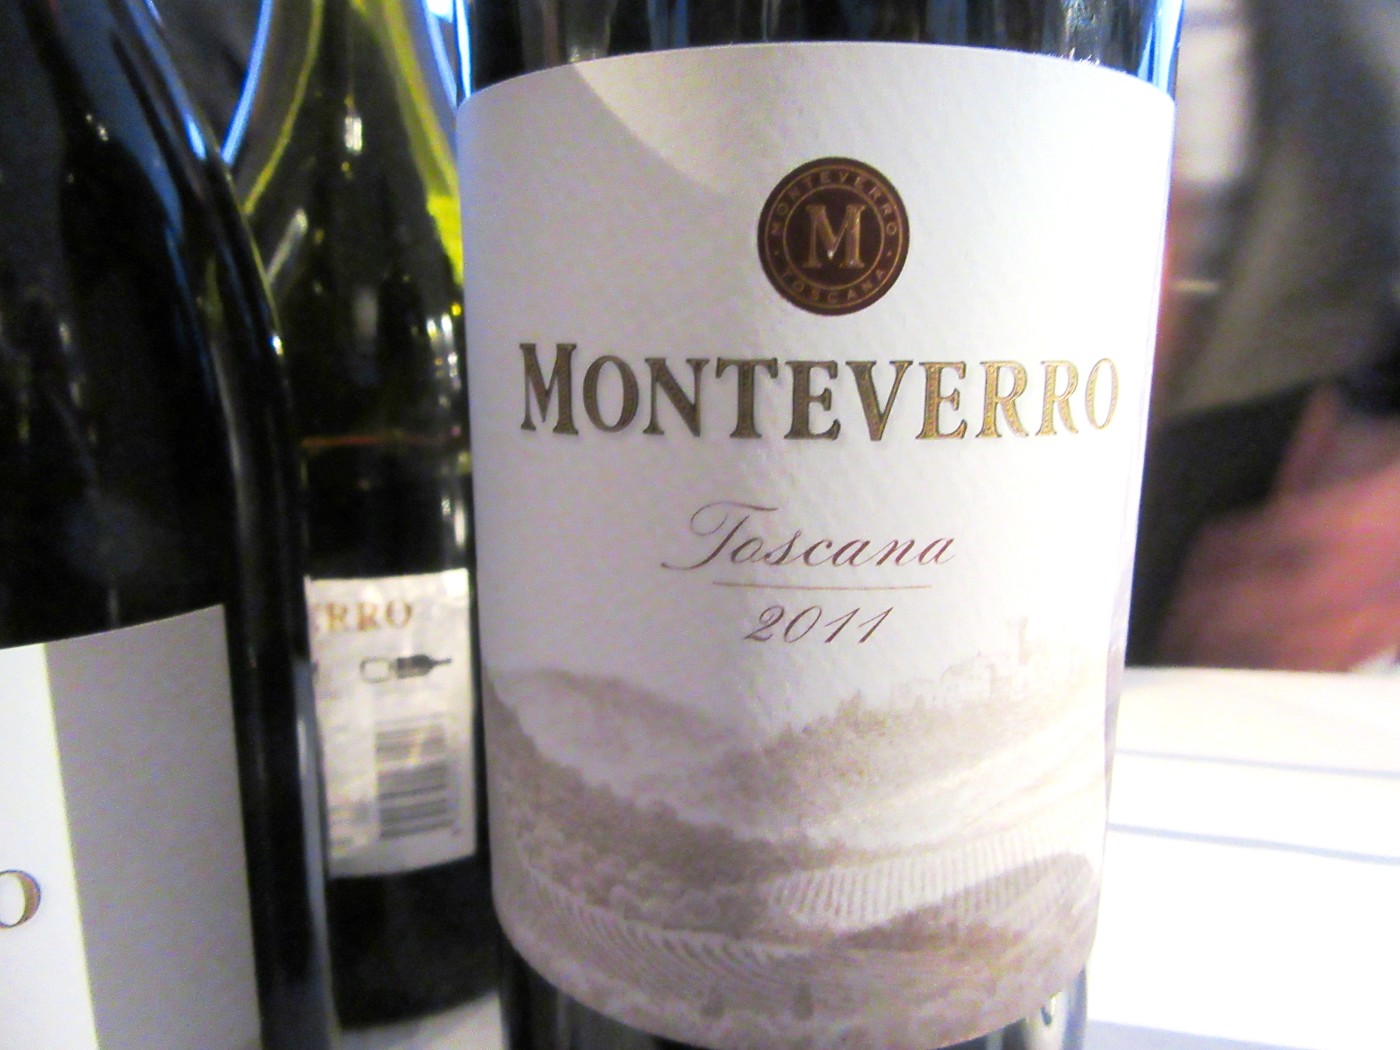 Monterverro, Toscana 2011 IGT, Tuscany, Italy, Wine Casual